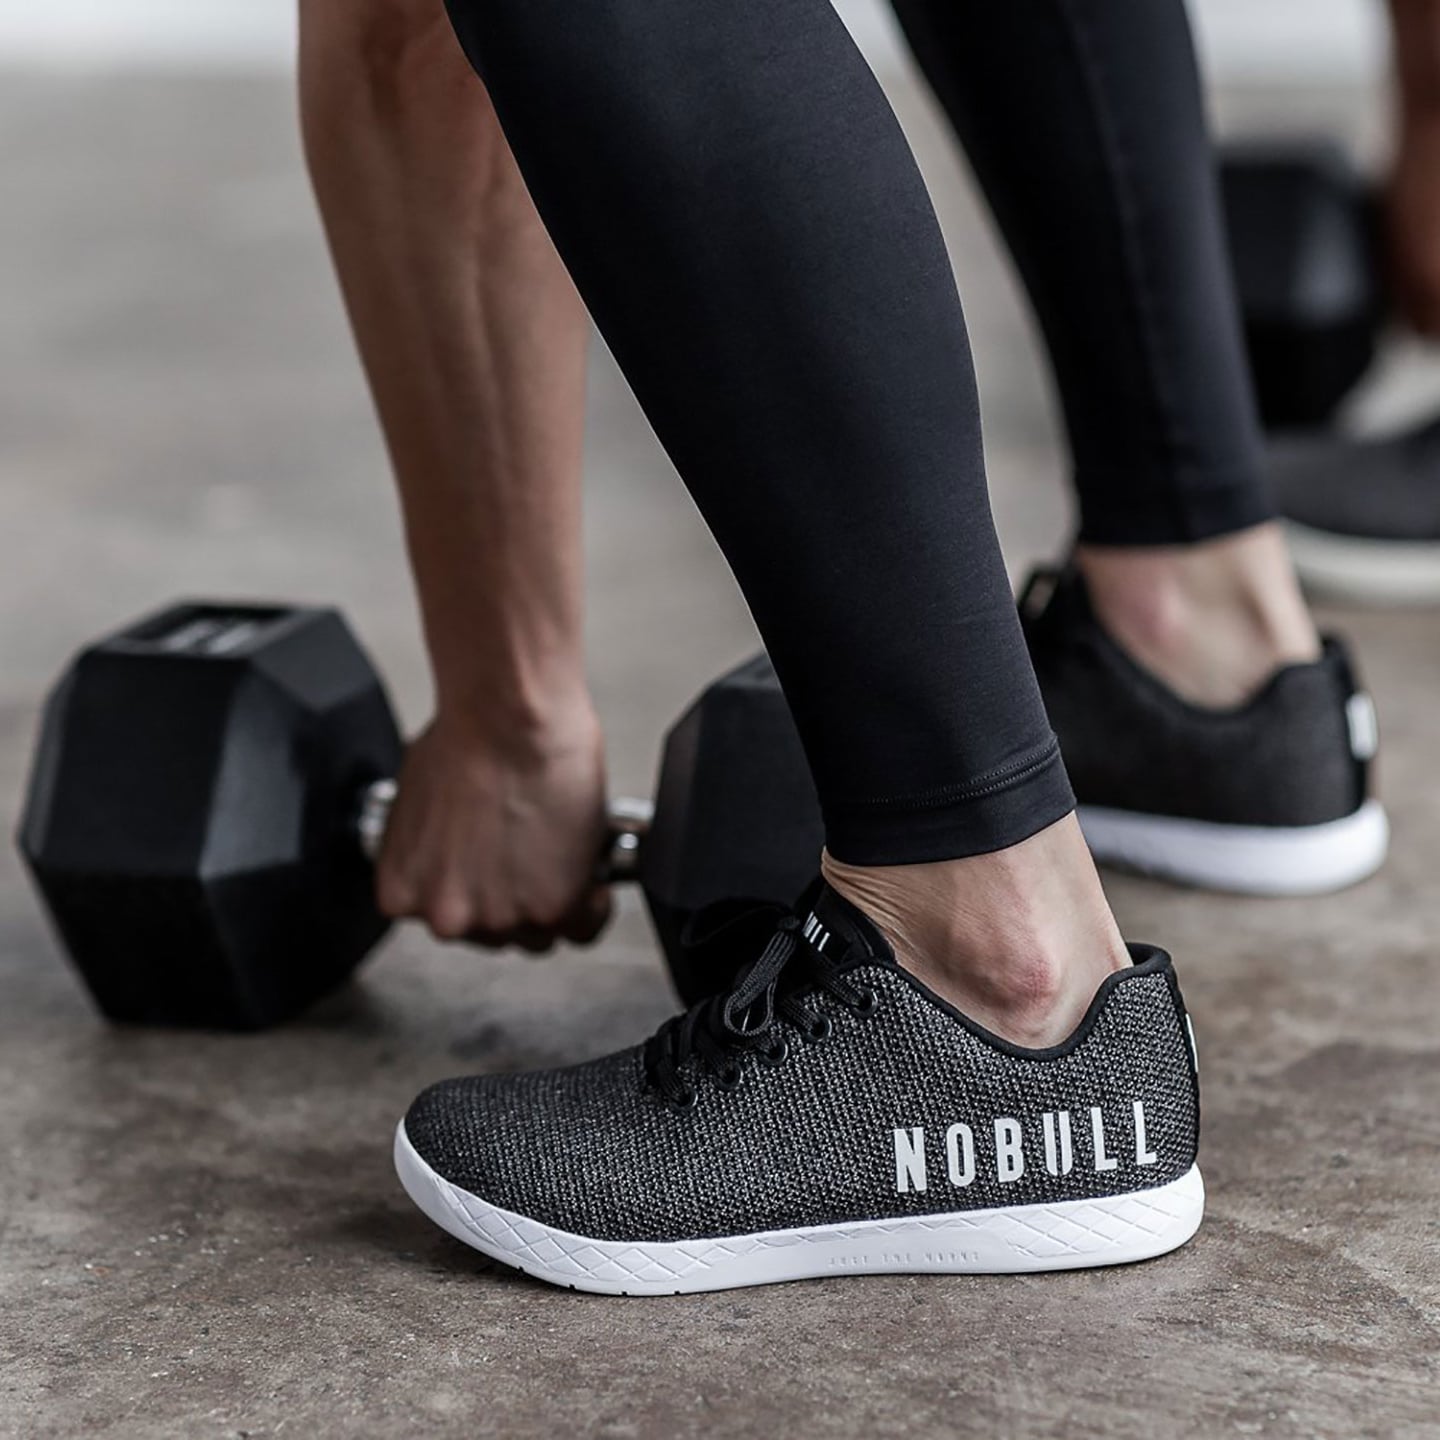 Nobull Shoe Review